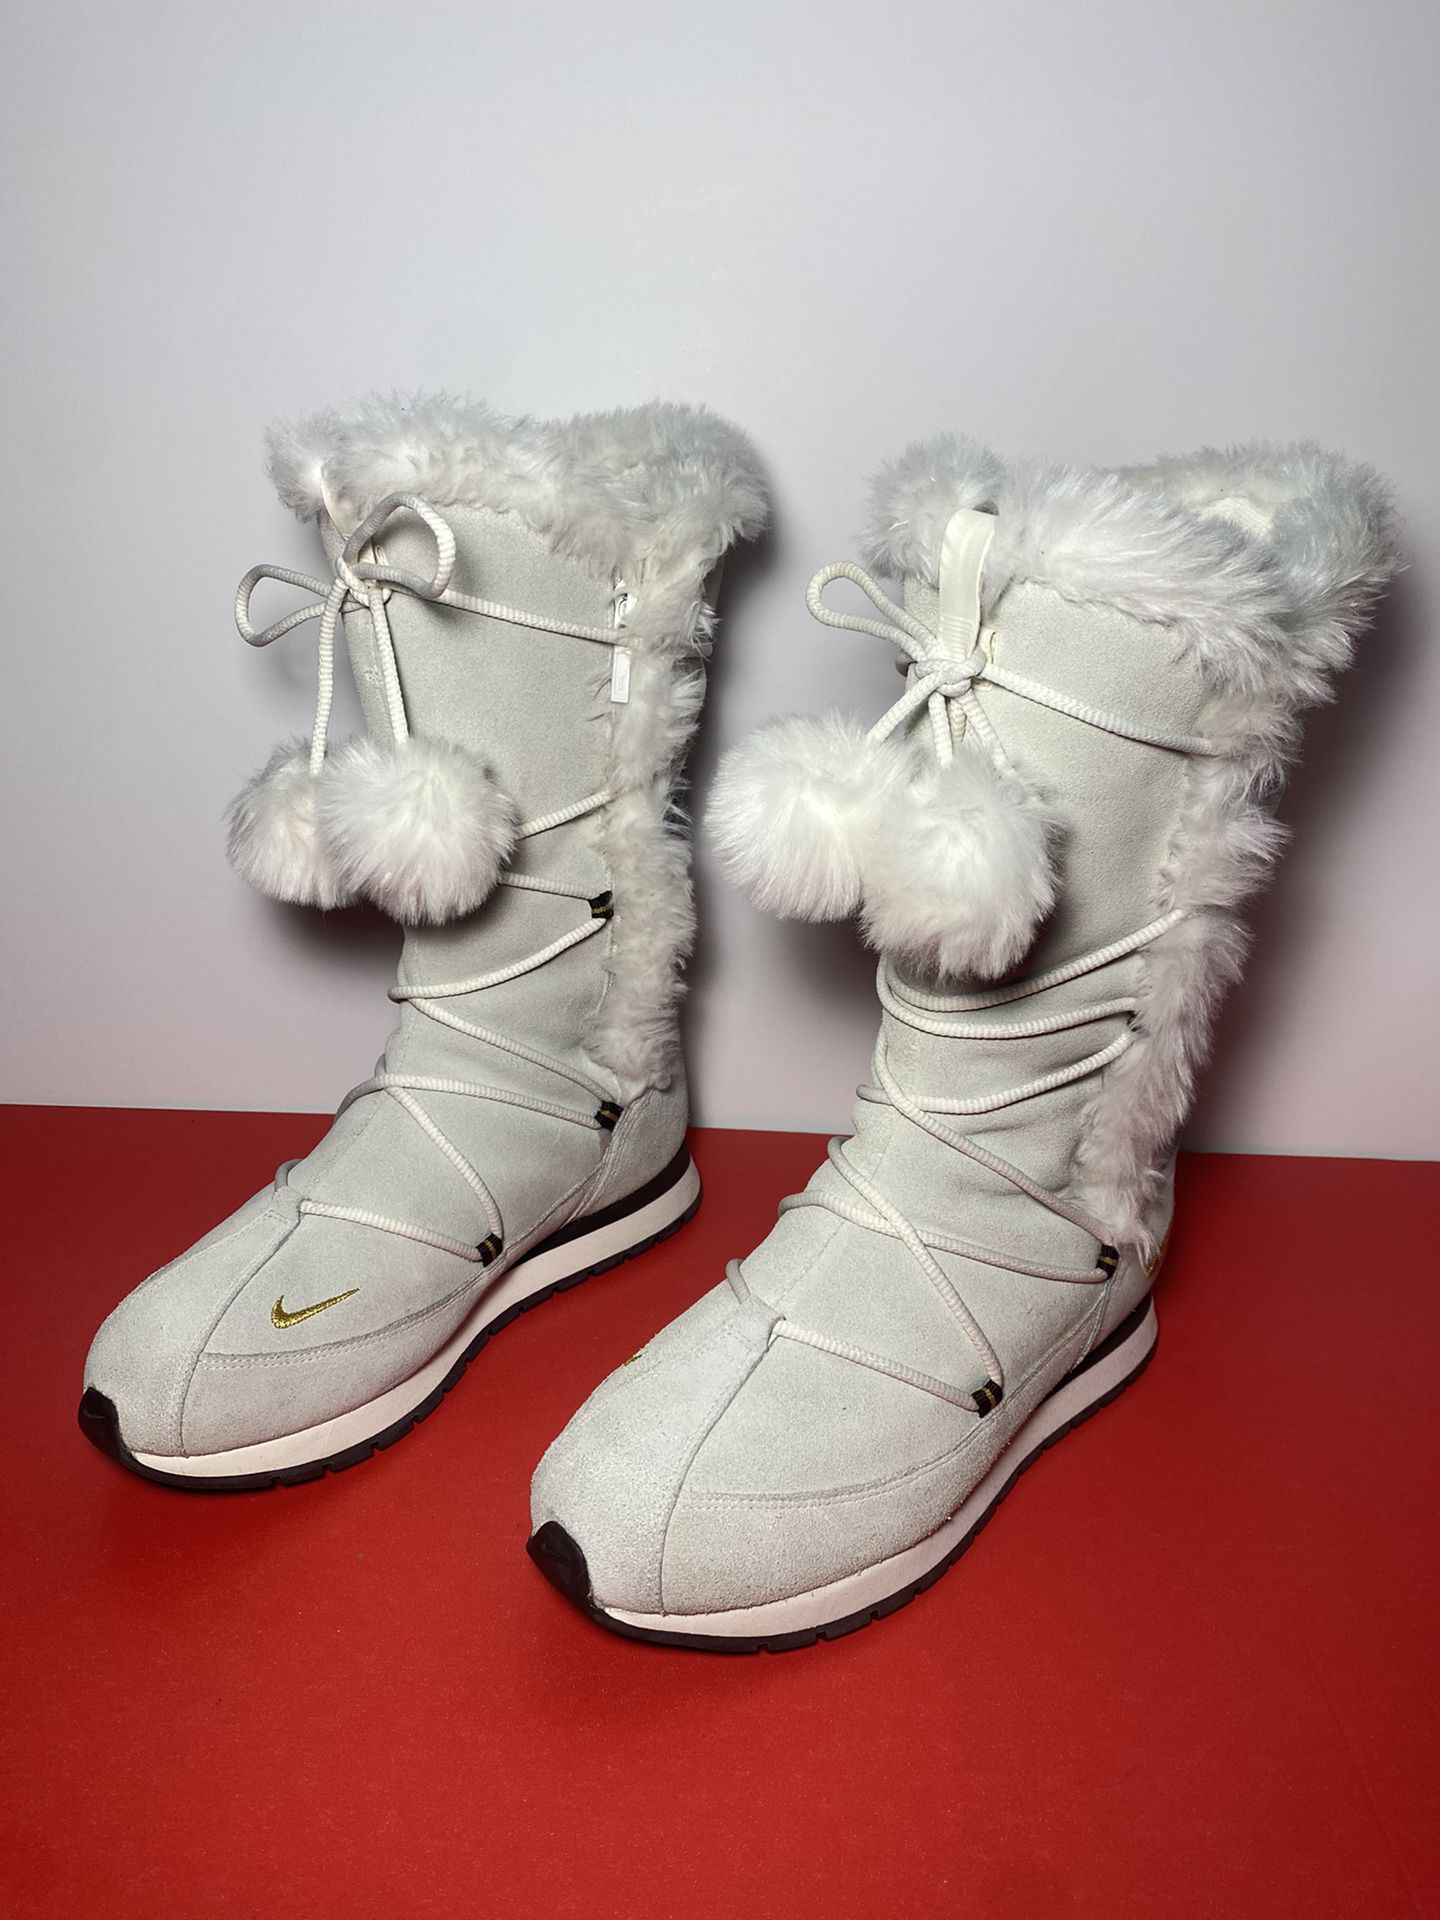 Nike White Gold Black 311959-173 Women Faux Fur Boot Sz 8.5 Pom Pom for Sale in New York, - OfferUp